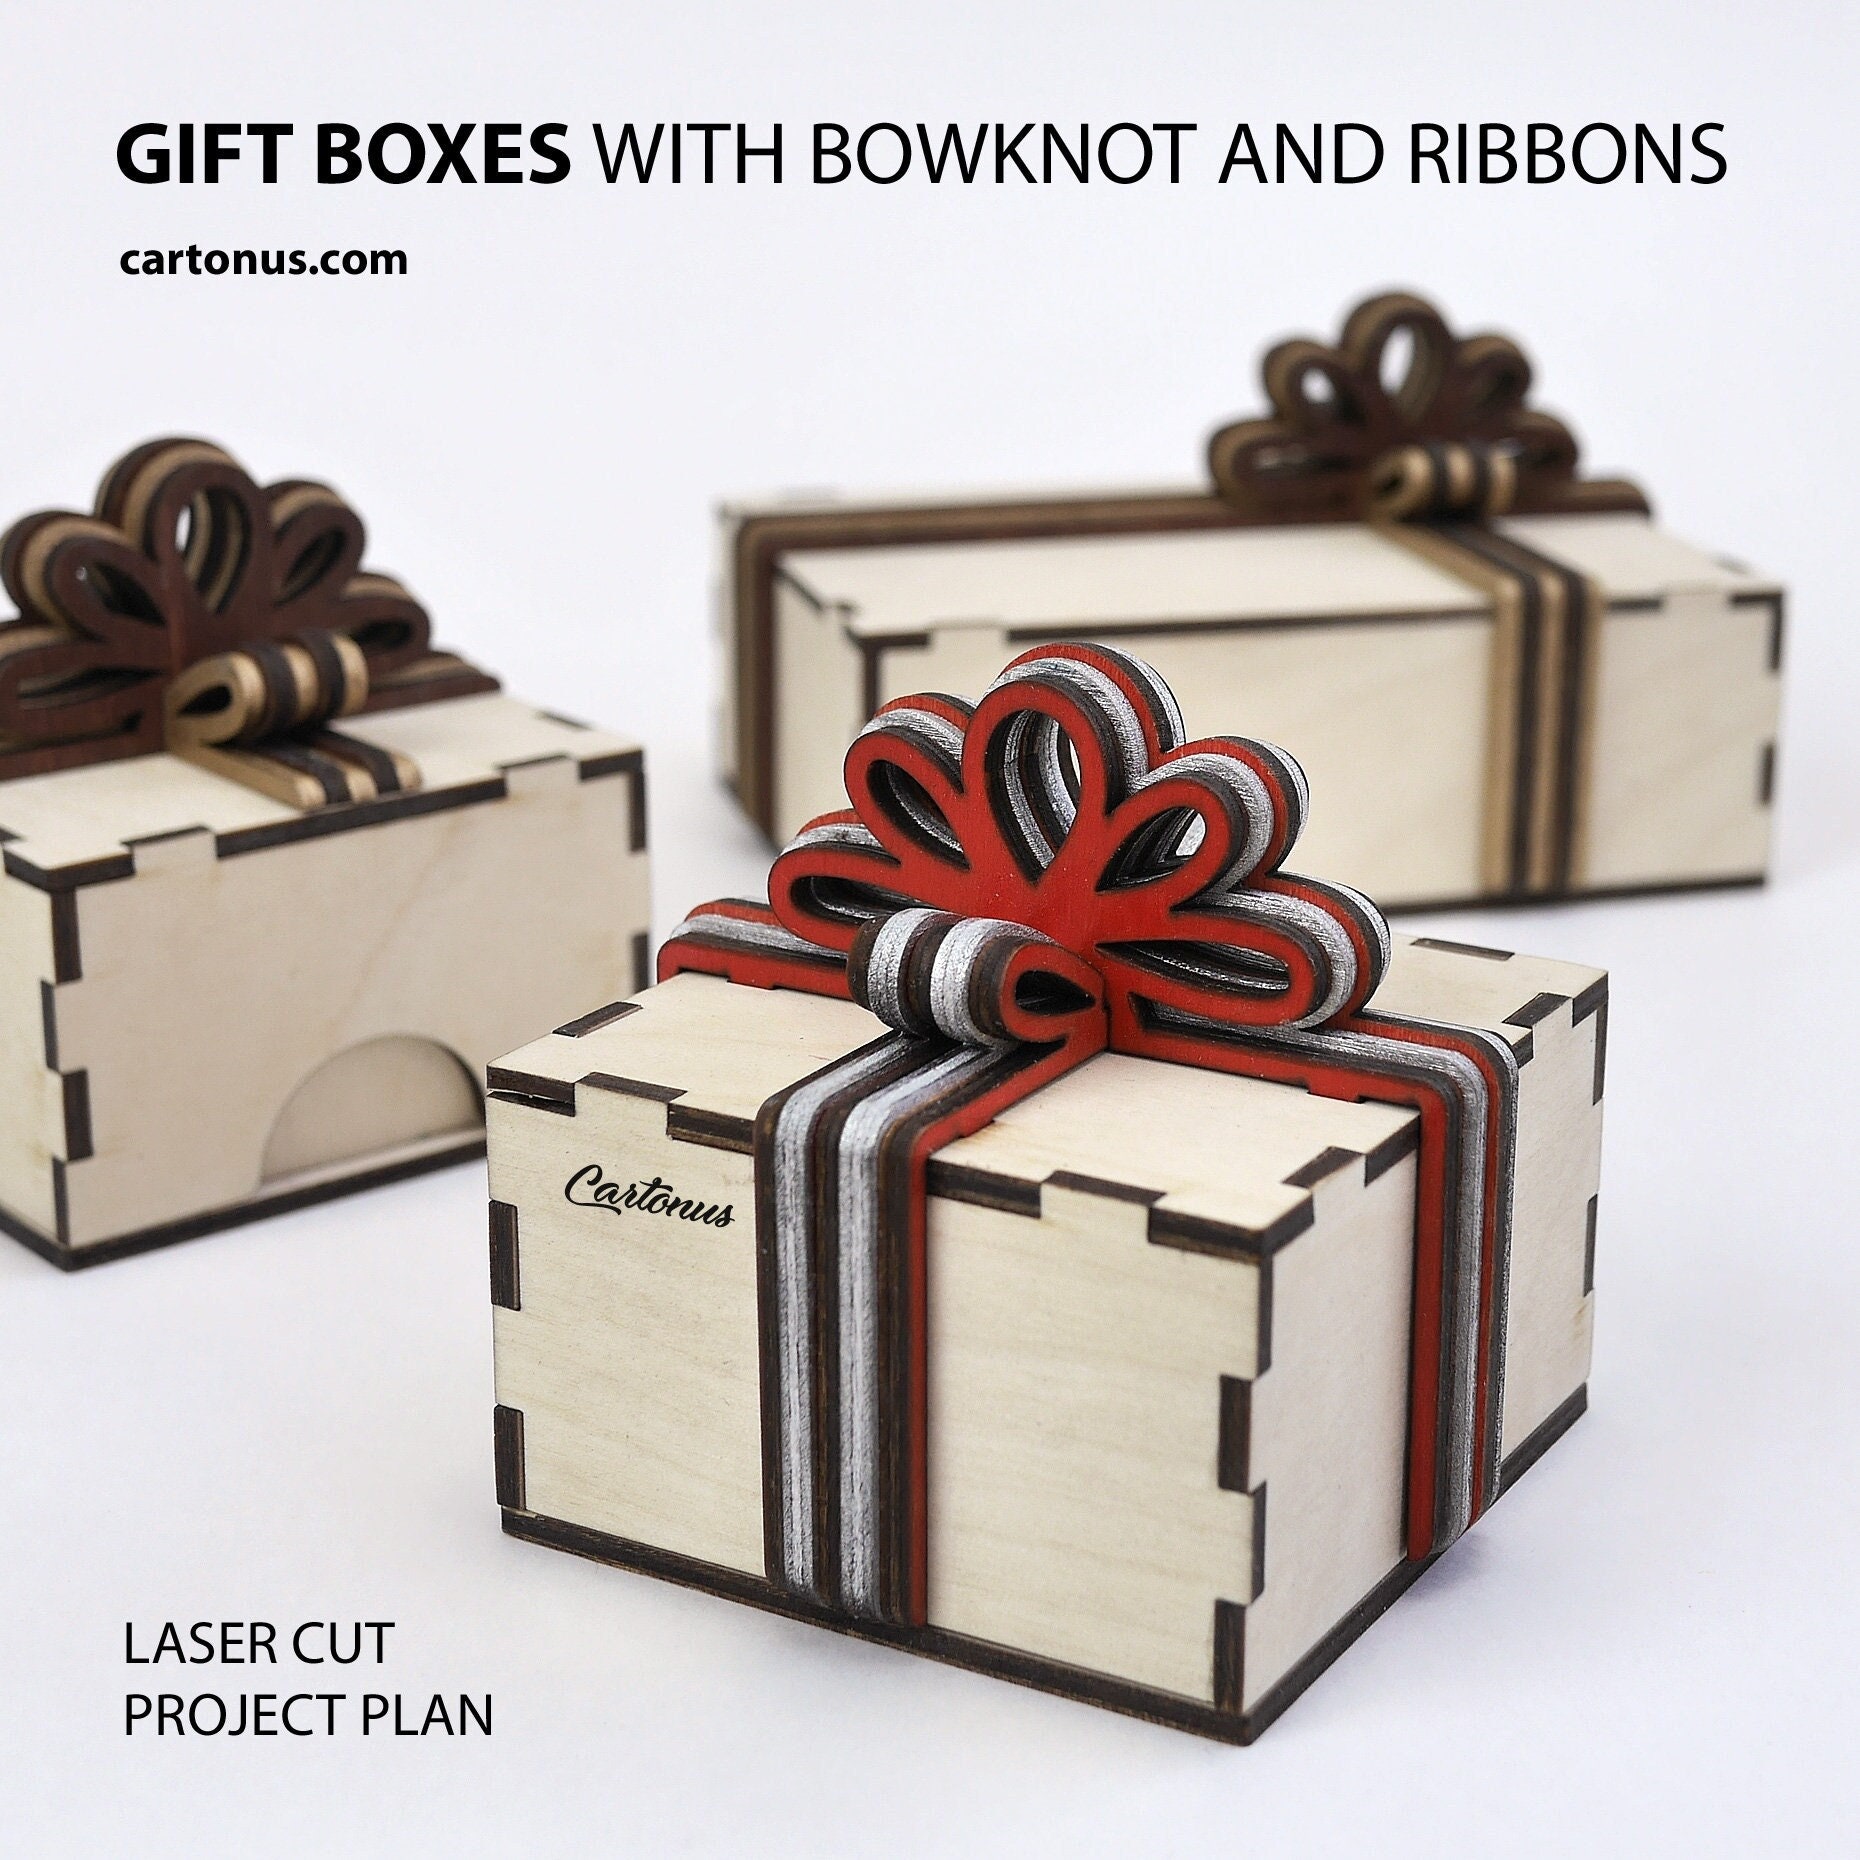 Wooden Ribbon Bow Maker DIY Bowknots Tutorial Birthday Wedding Valentine Christmas Holiday Gifts Wrapping Wreath Brim Decorative Bowknots Making Tool